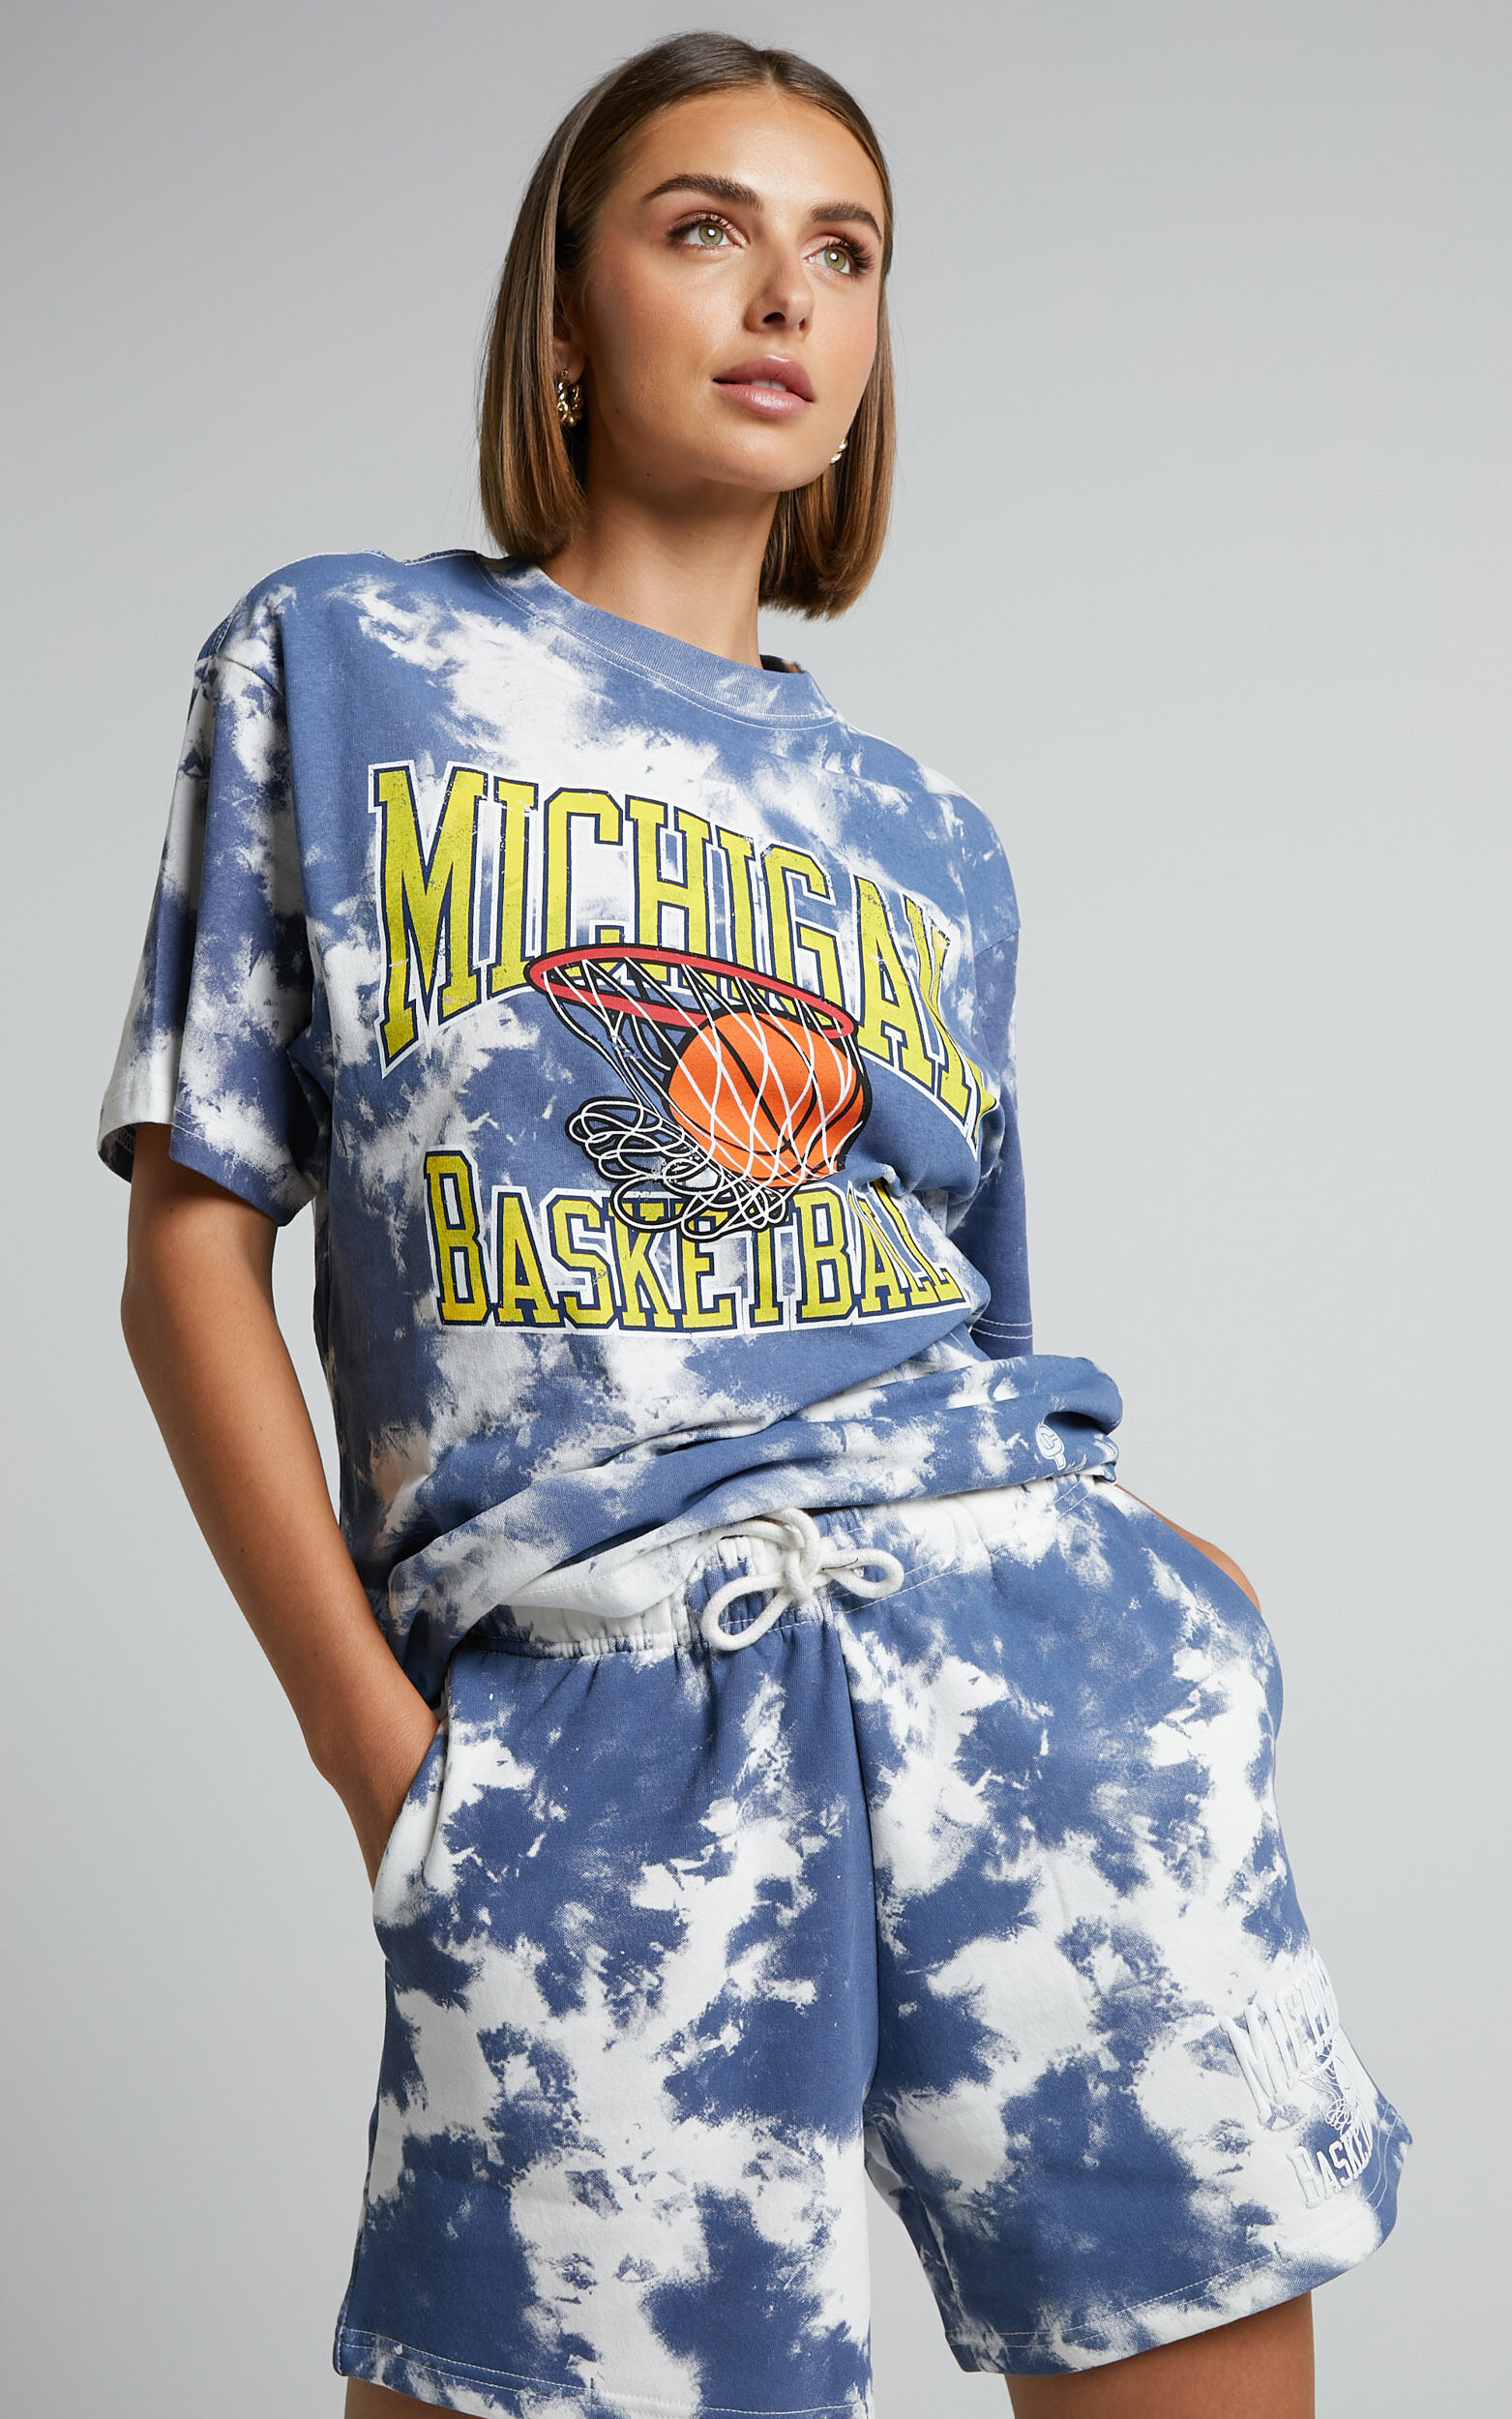 Mitchell & Ness - Michigan Basketball Tee in Blue Tie Dye - L, WHT1